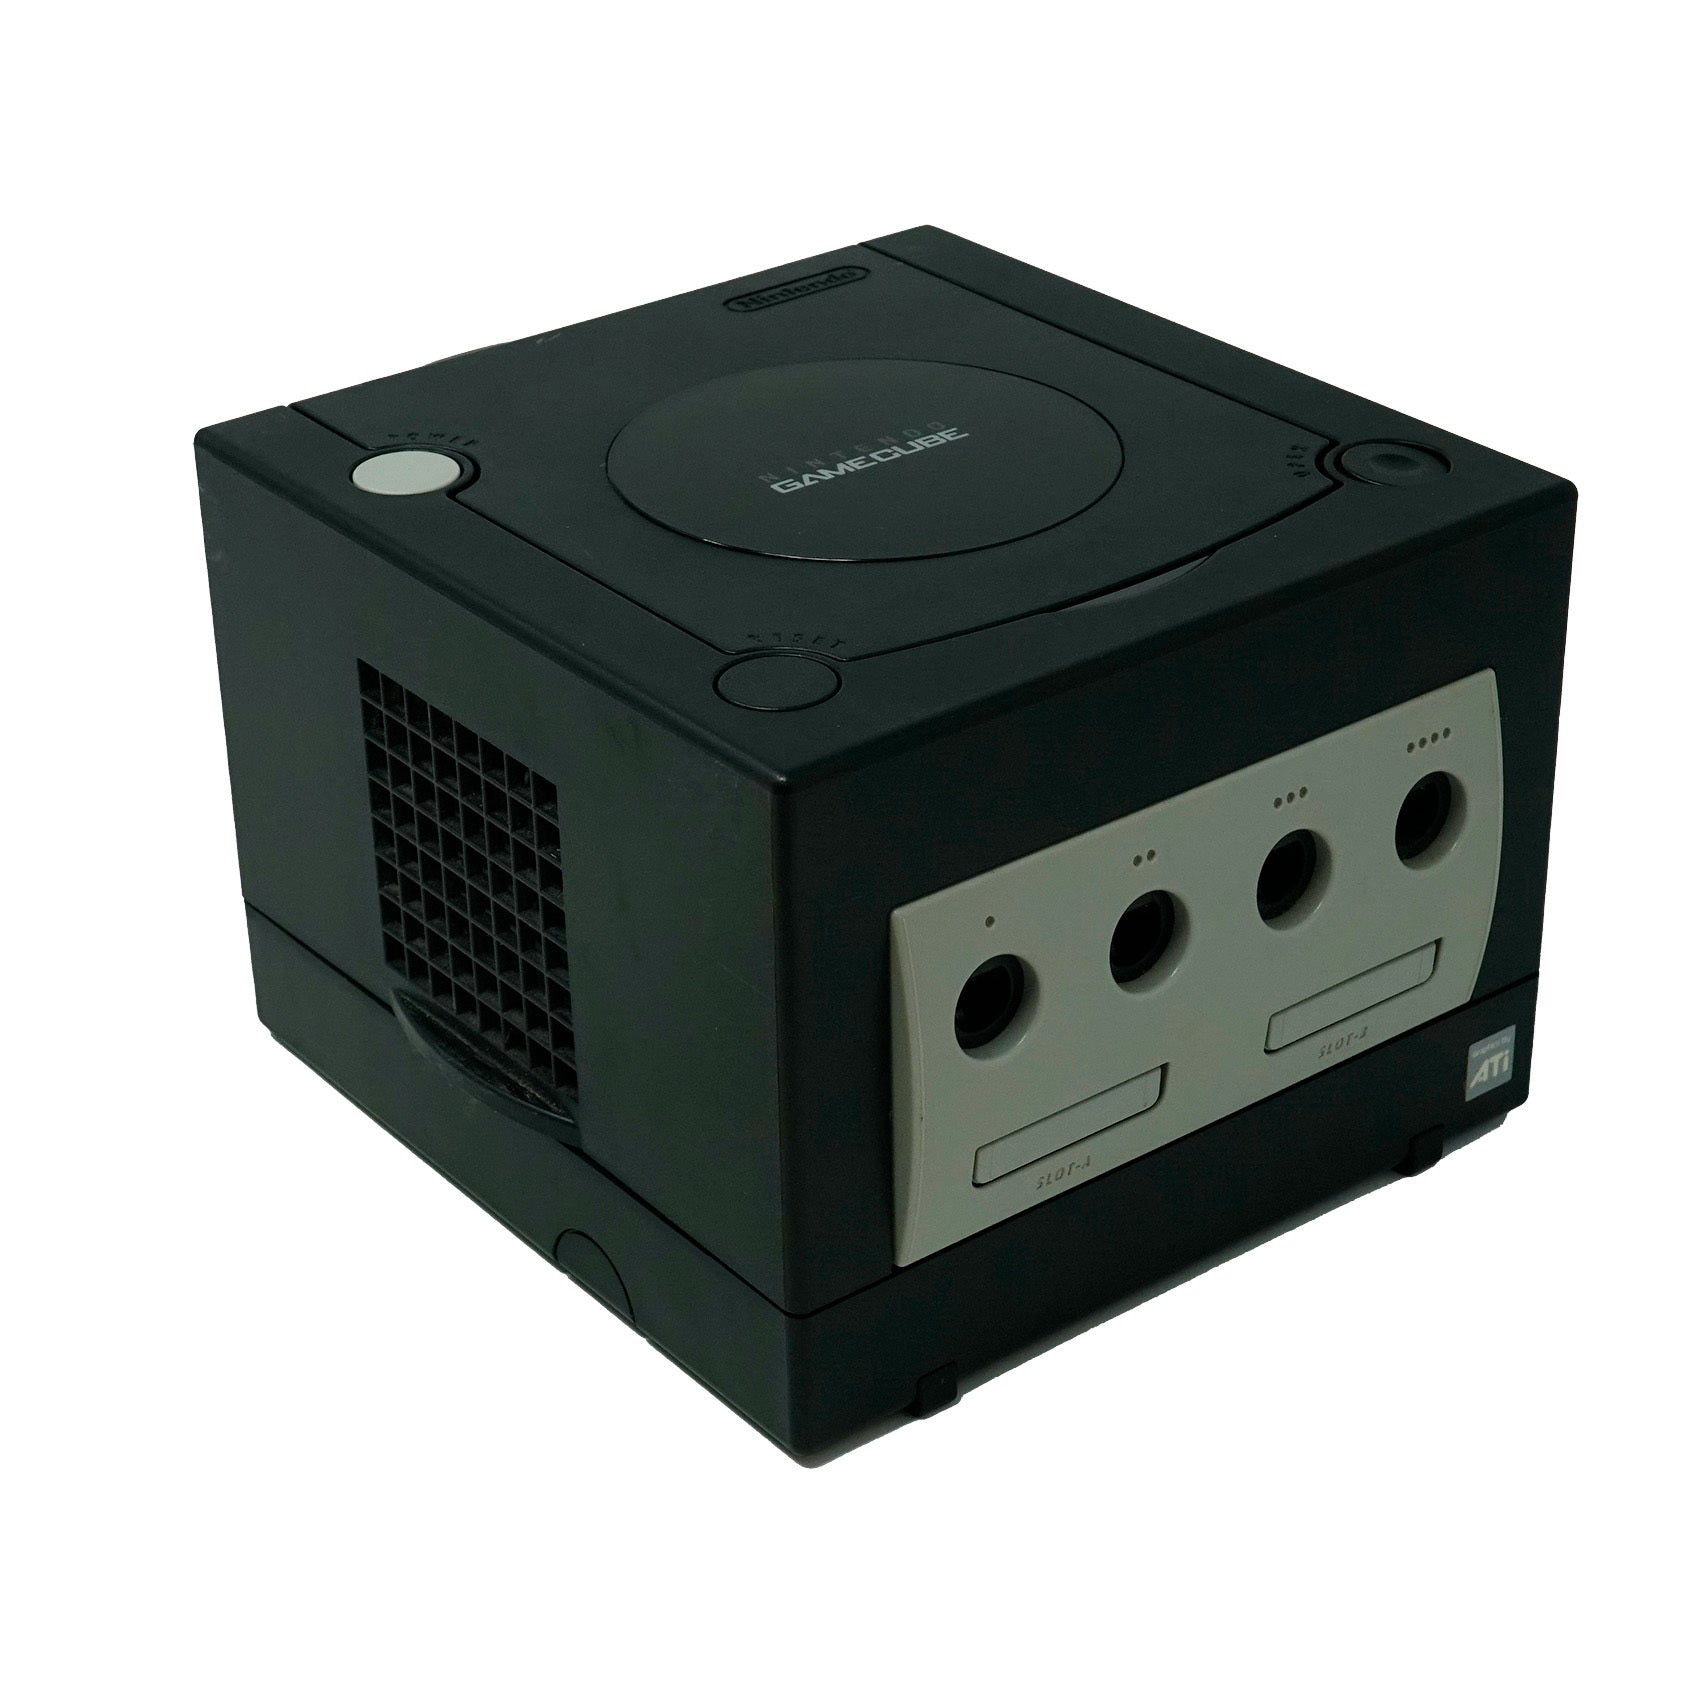 Nintendo GameCube System - Refurbished - NTSC-U/C (English) Modding